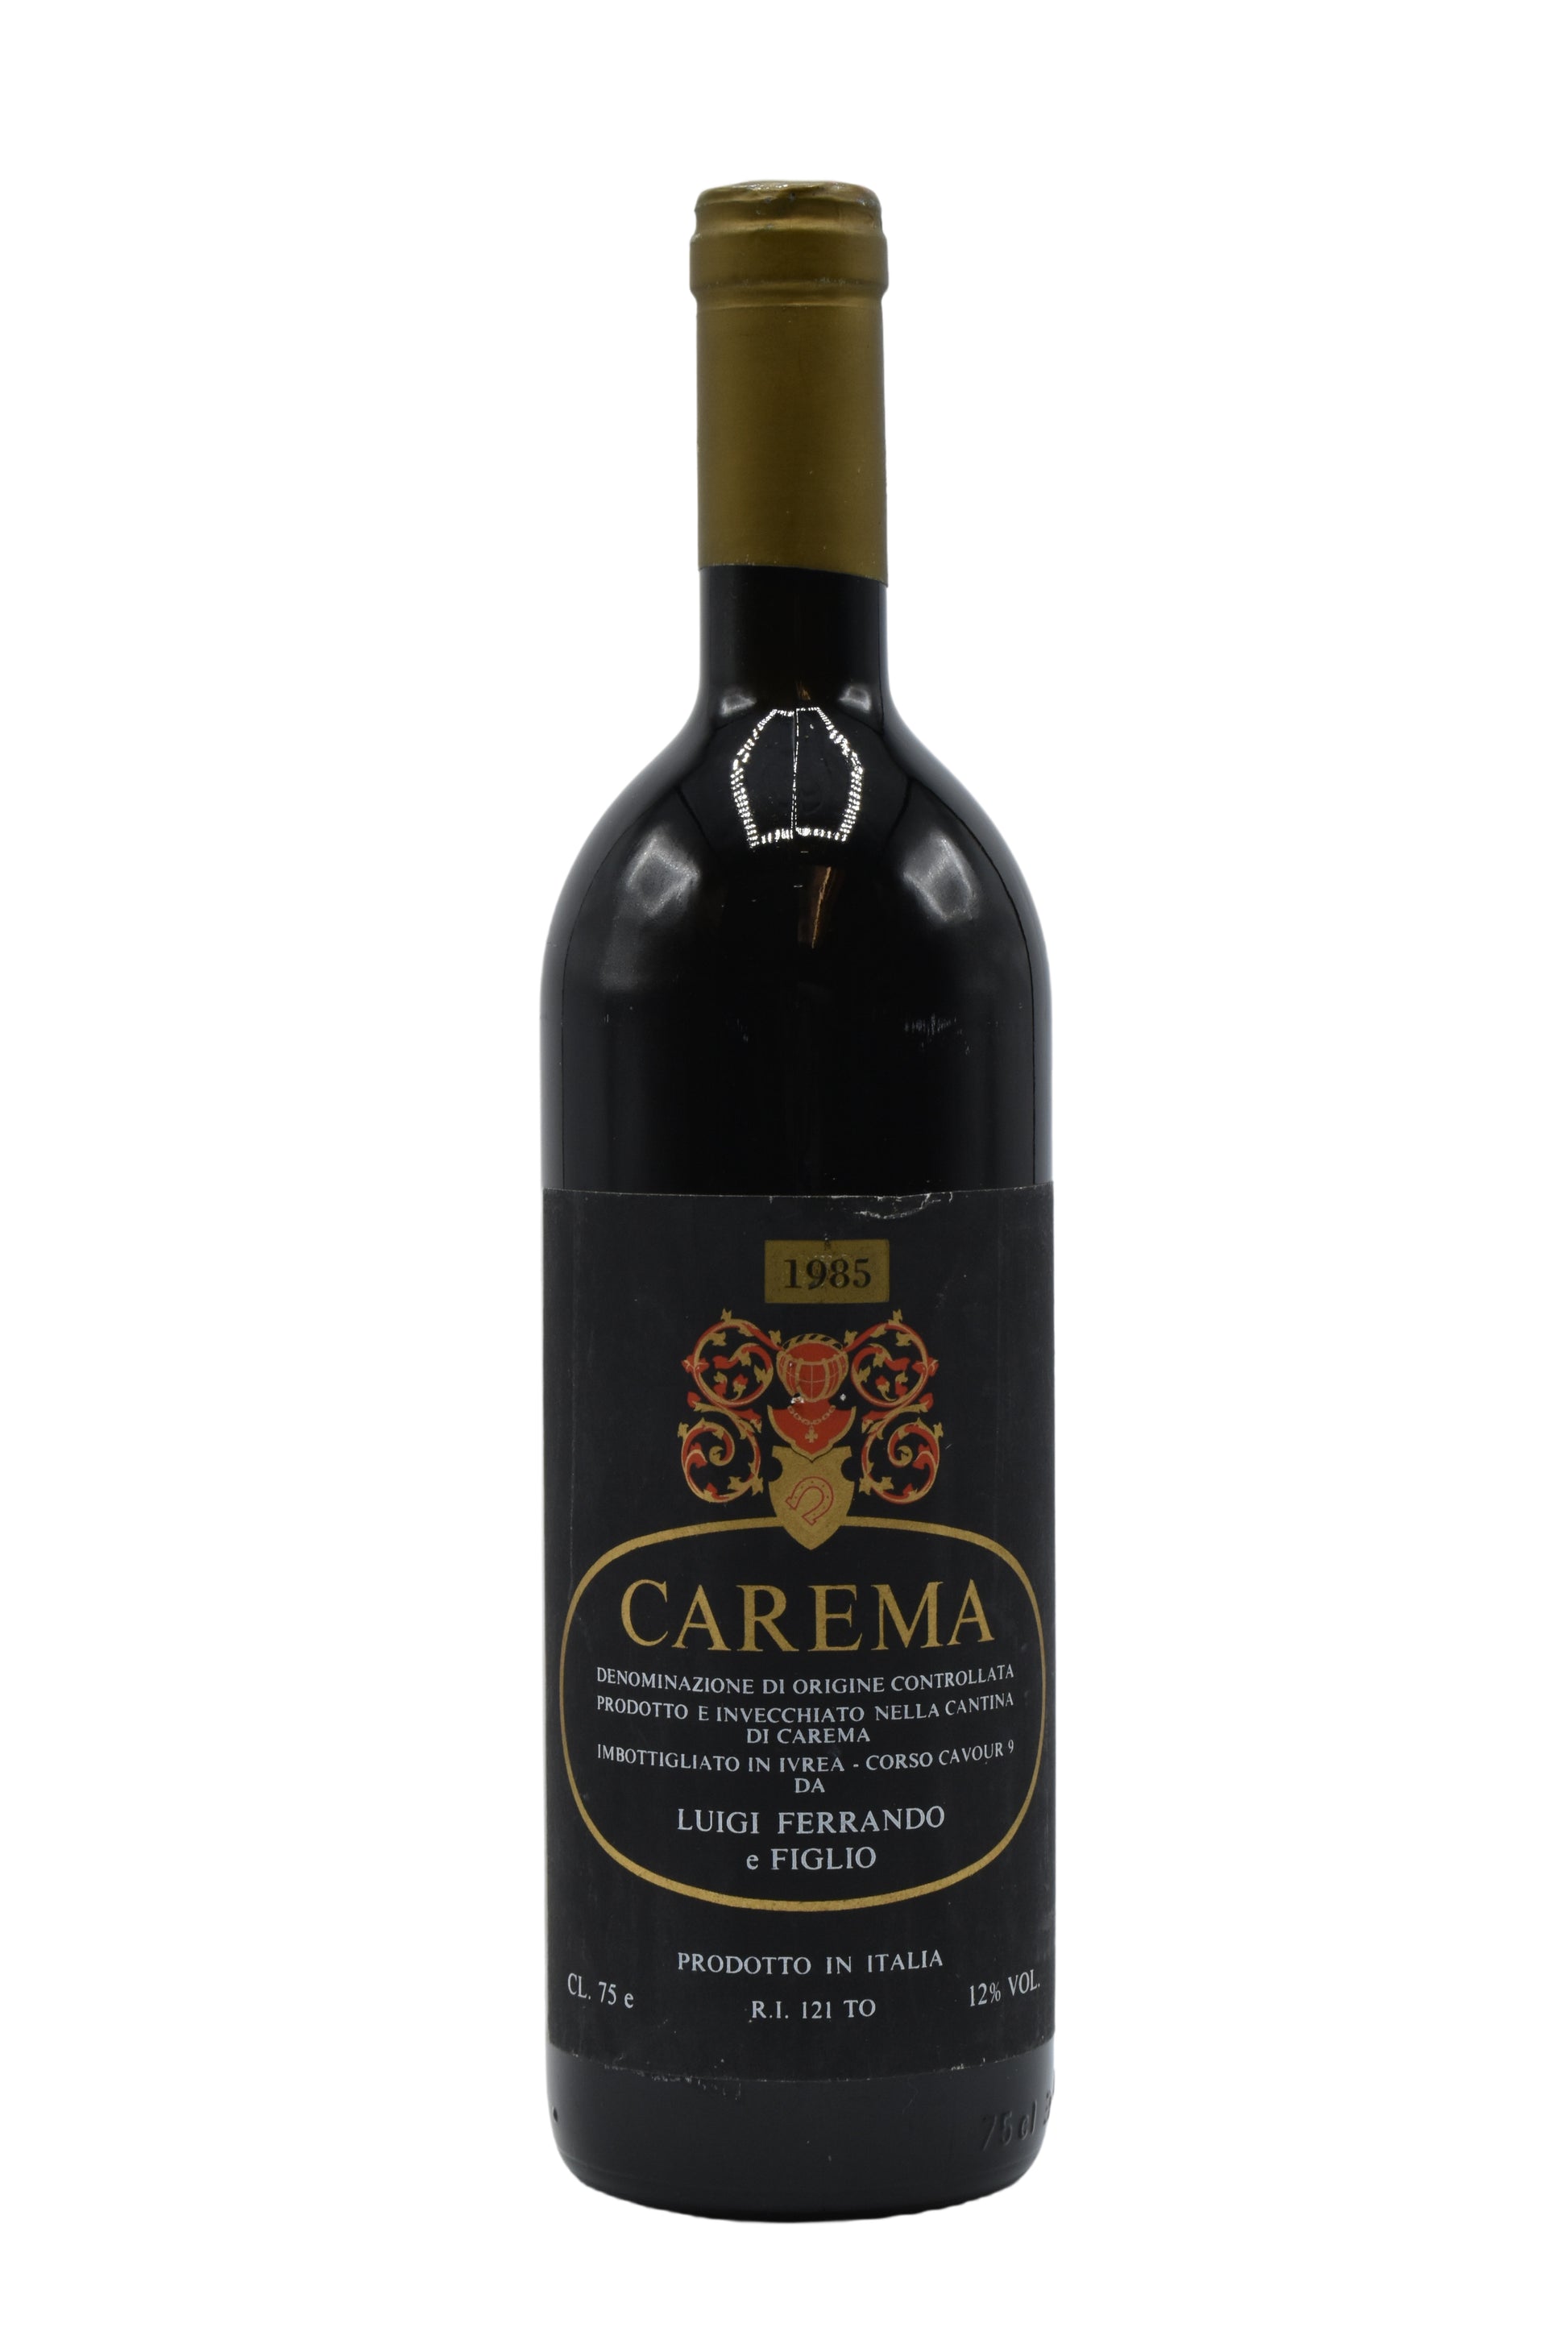 1985 Luigi Ferrando, Carema Black Label Riserva (Etichetta Nera) 750ml - Walker Wine Co.